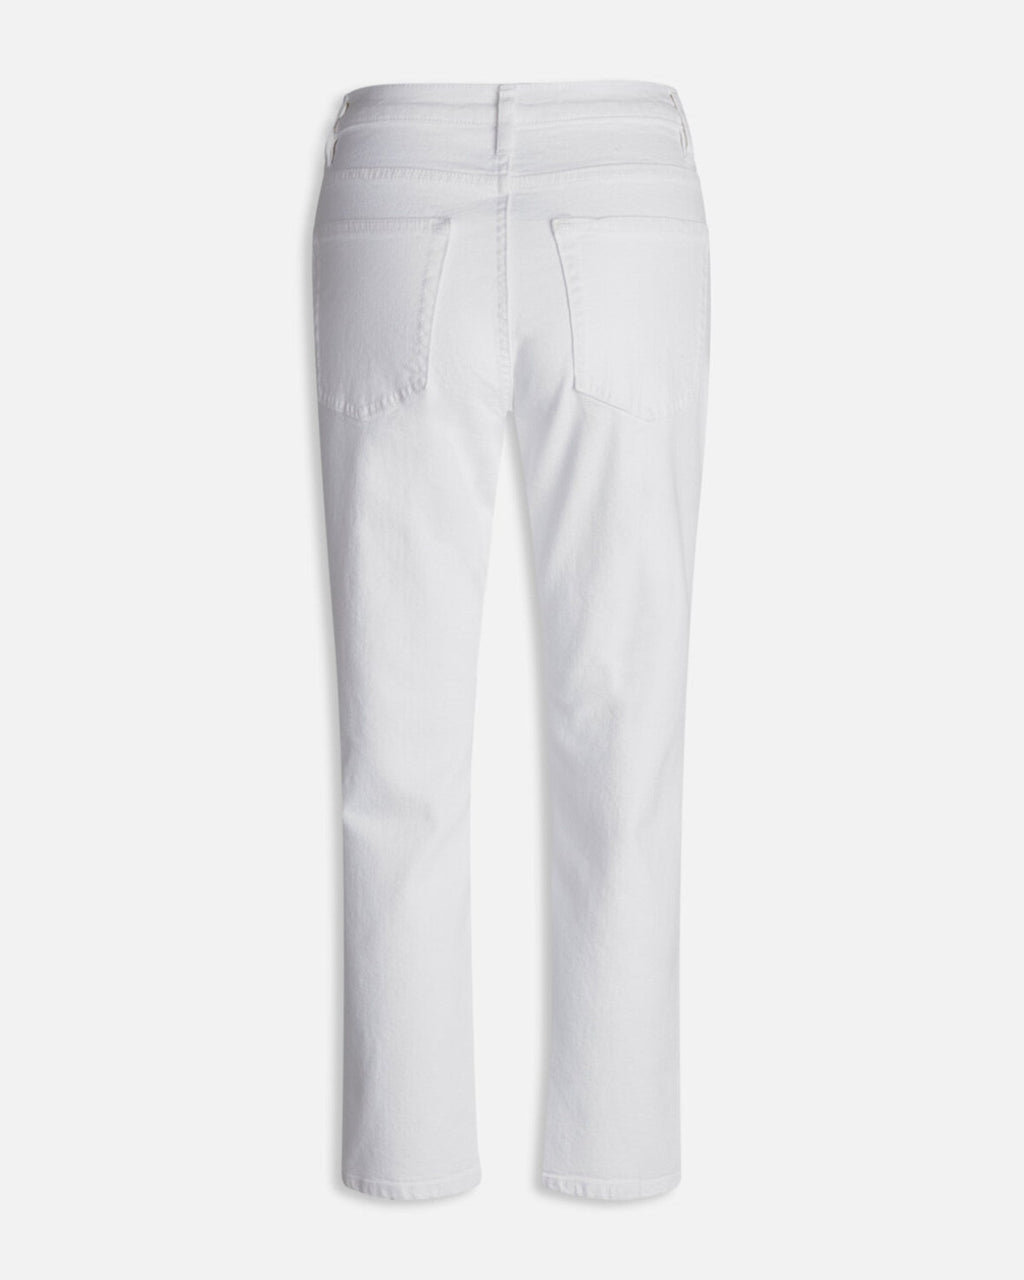 Owi牛仔裤 - 白色